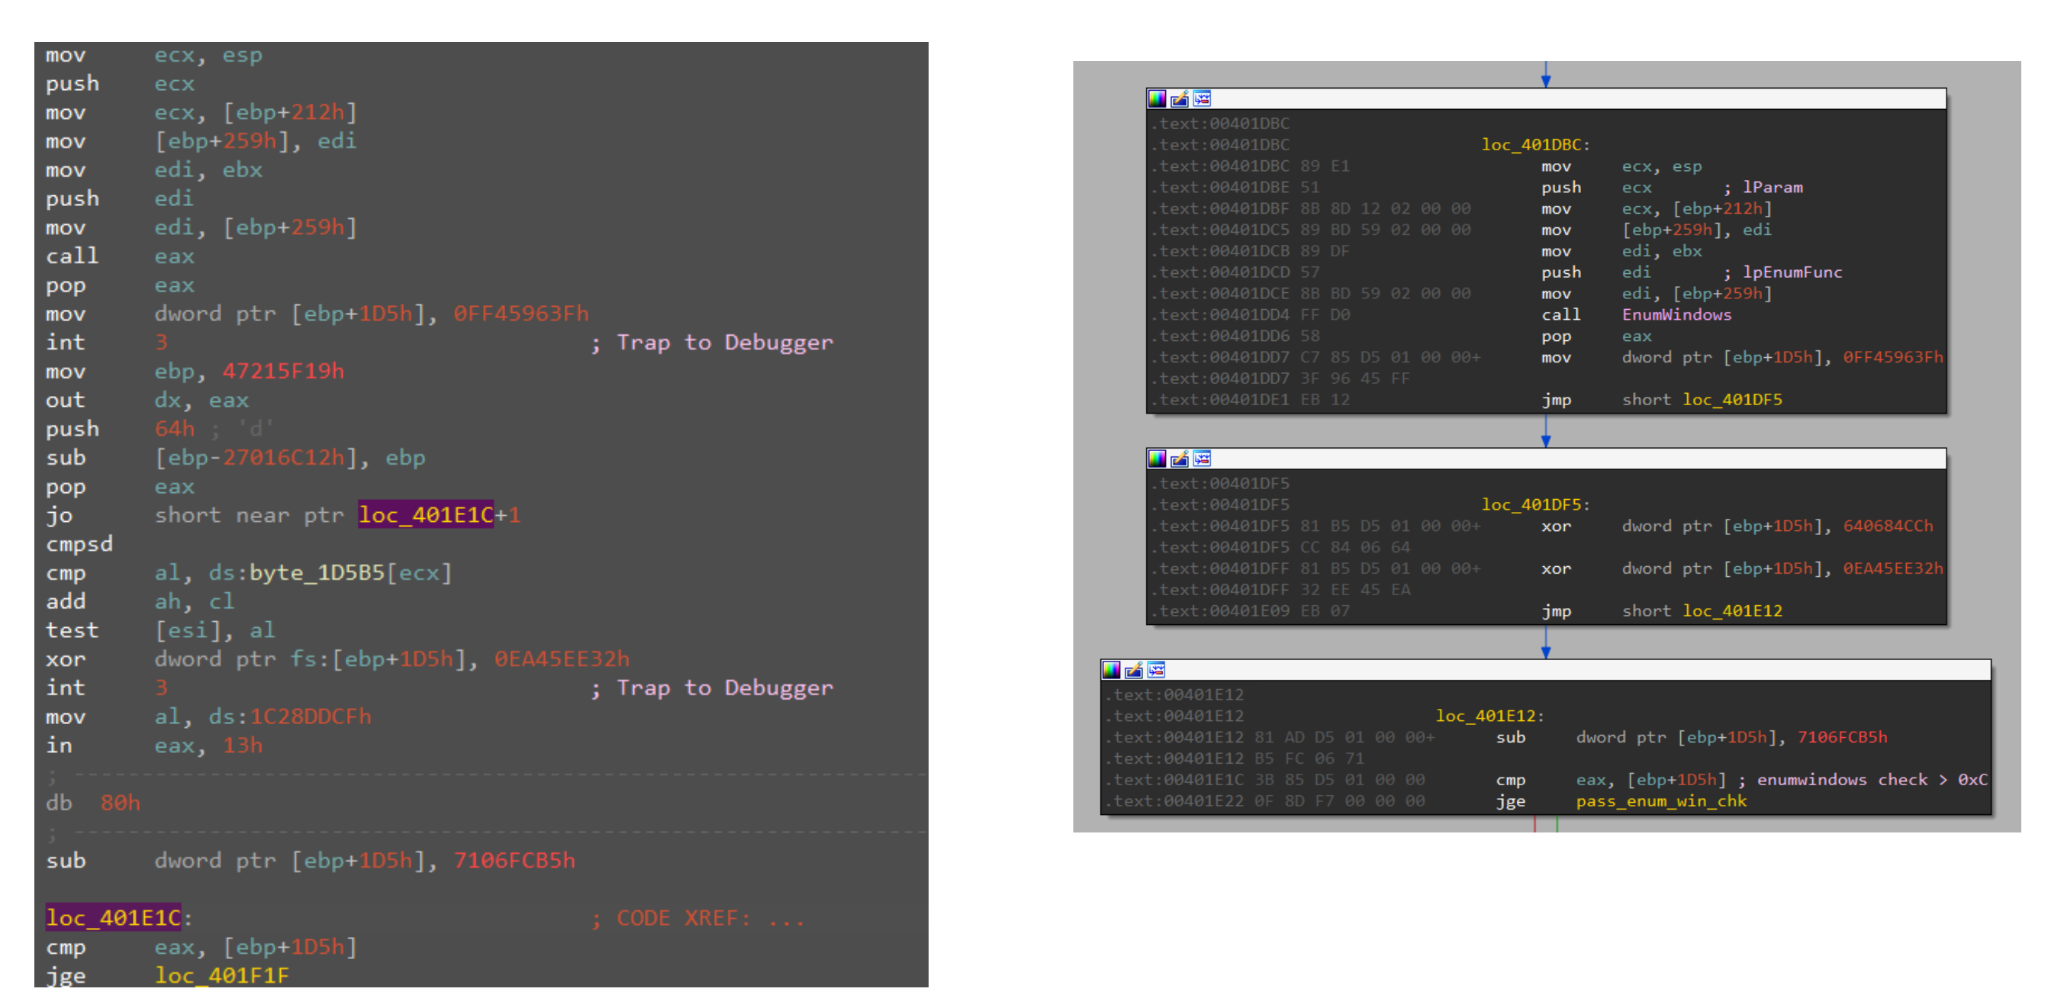 IDA ProがGuloaderサンプルの難読化を自動的に解除したところ。Pythonスクリプト適用前(左)と適用後(右)のコード